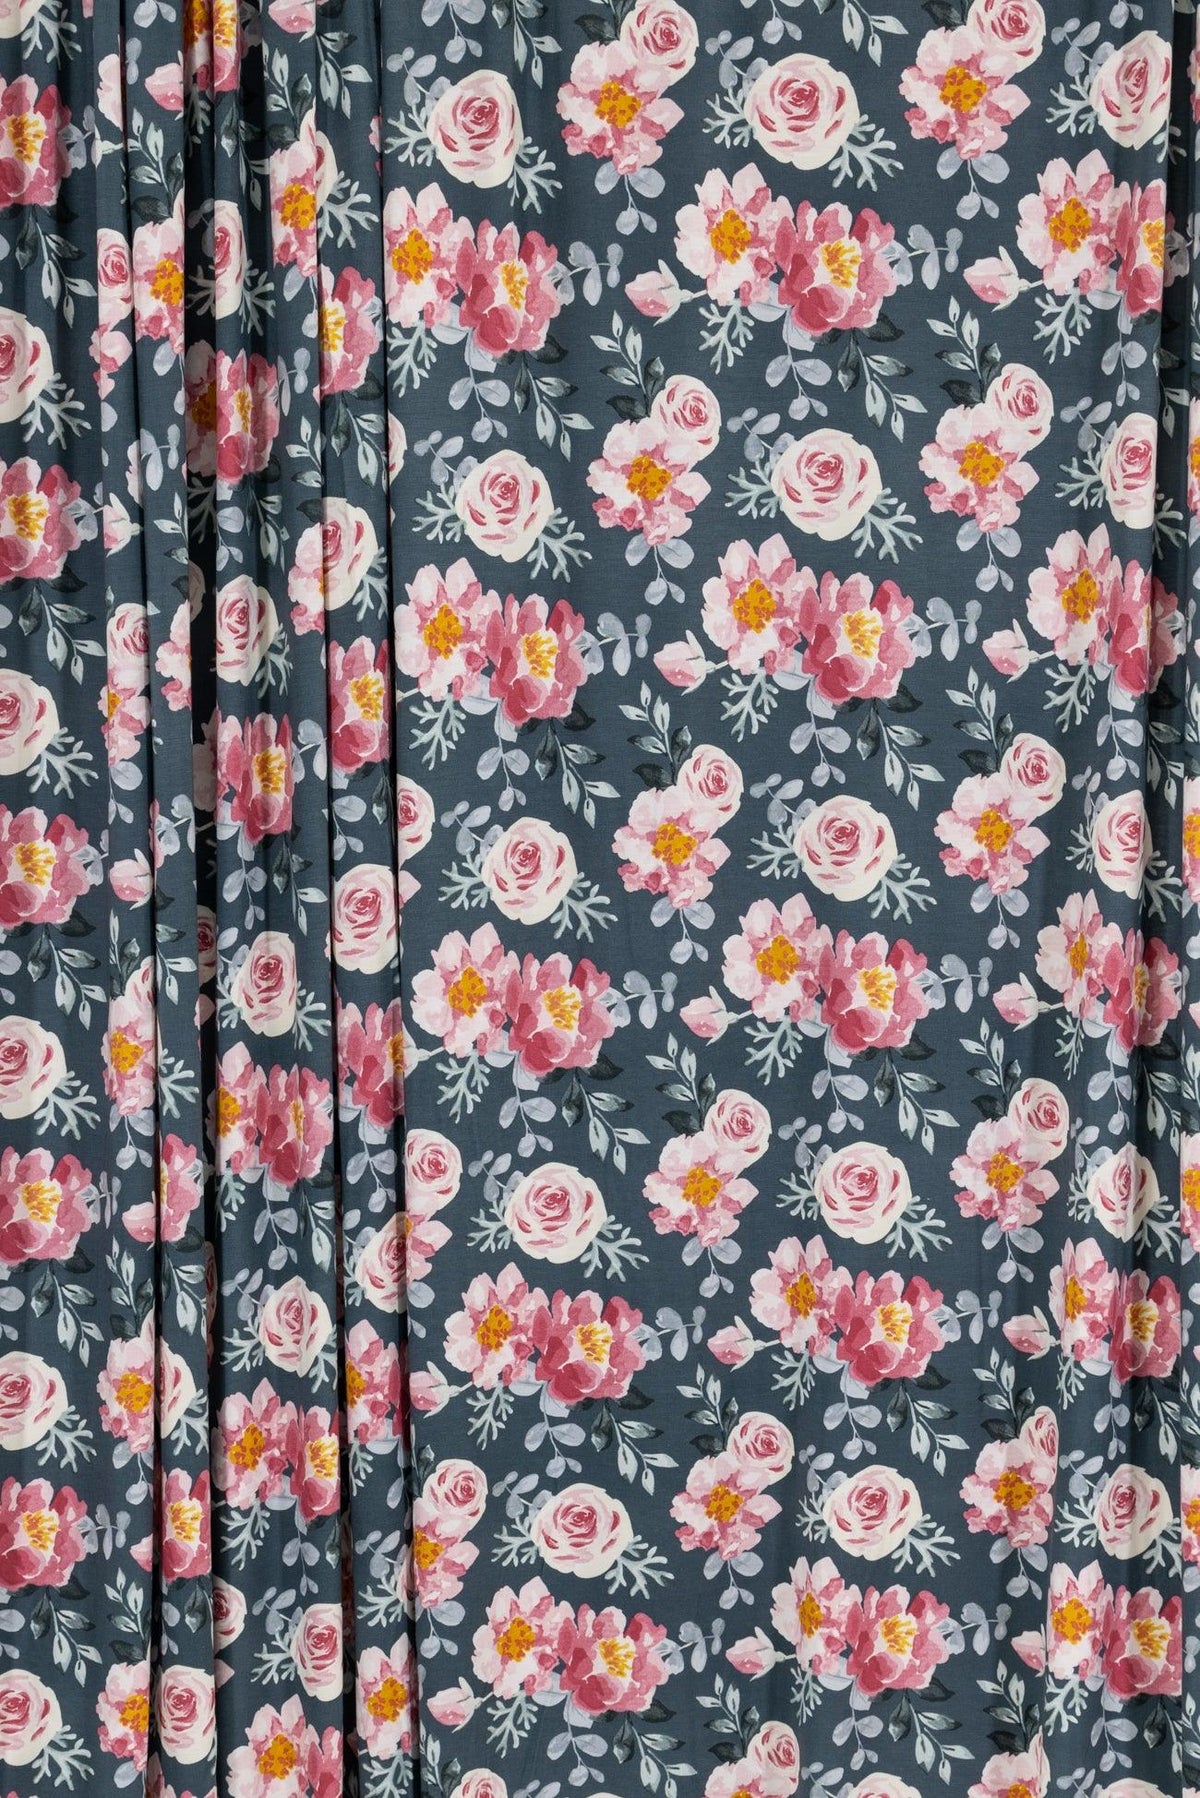 Rose Of Sharon Rayon Knit - Marcy Tilton Fabrics